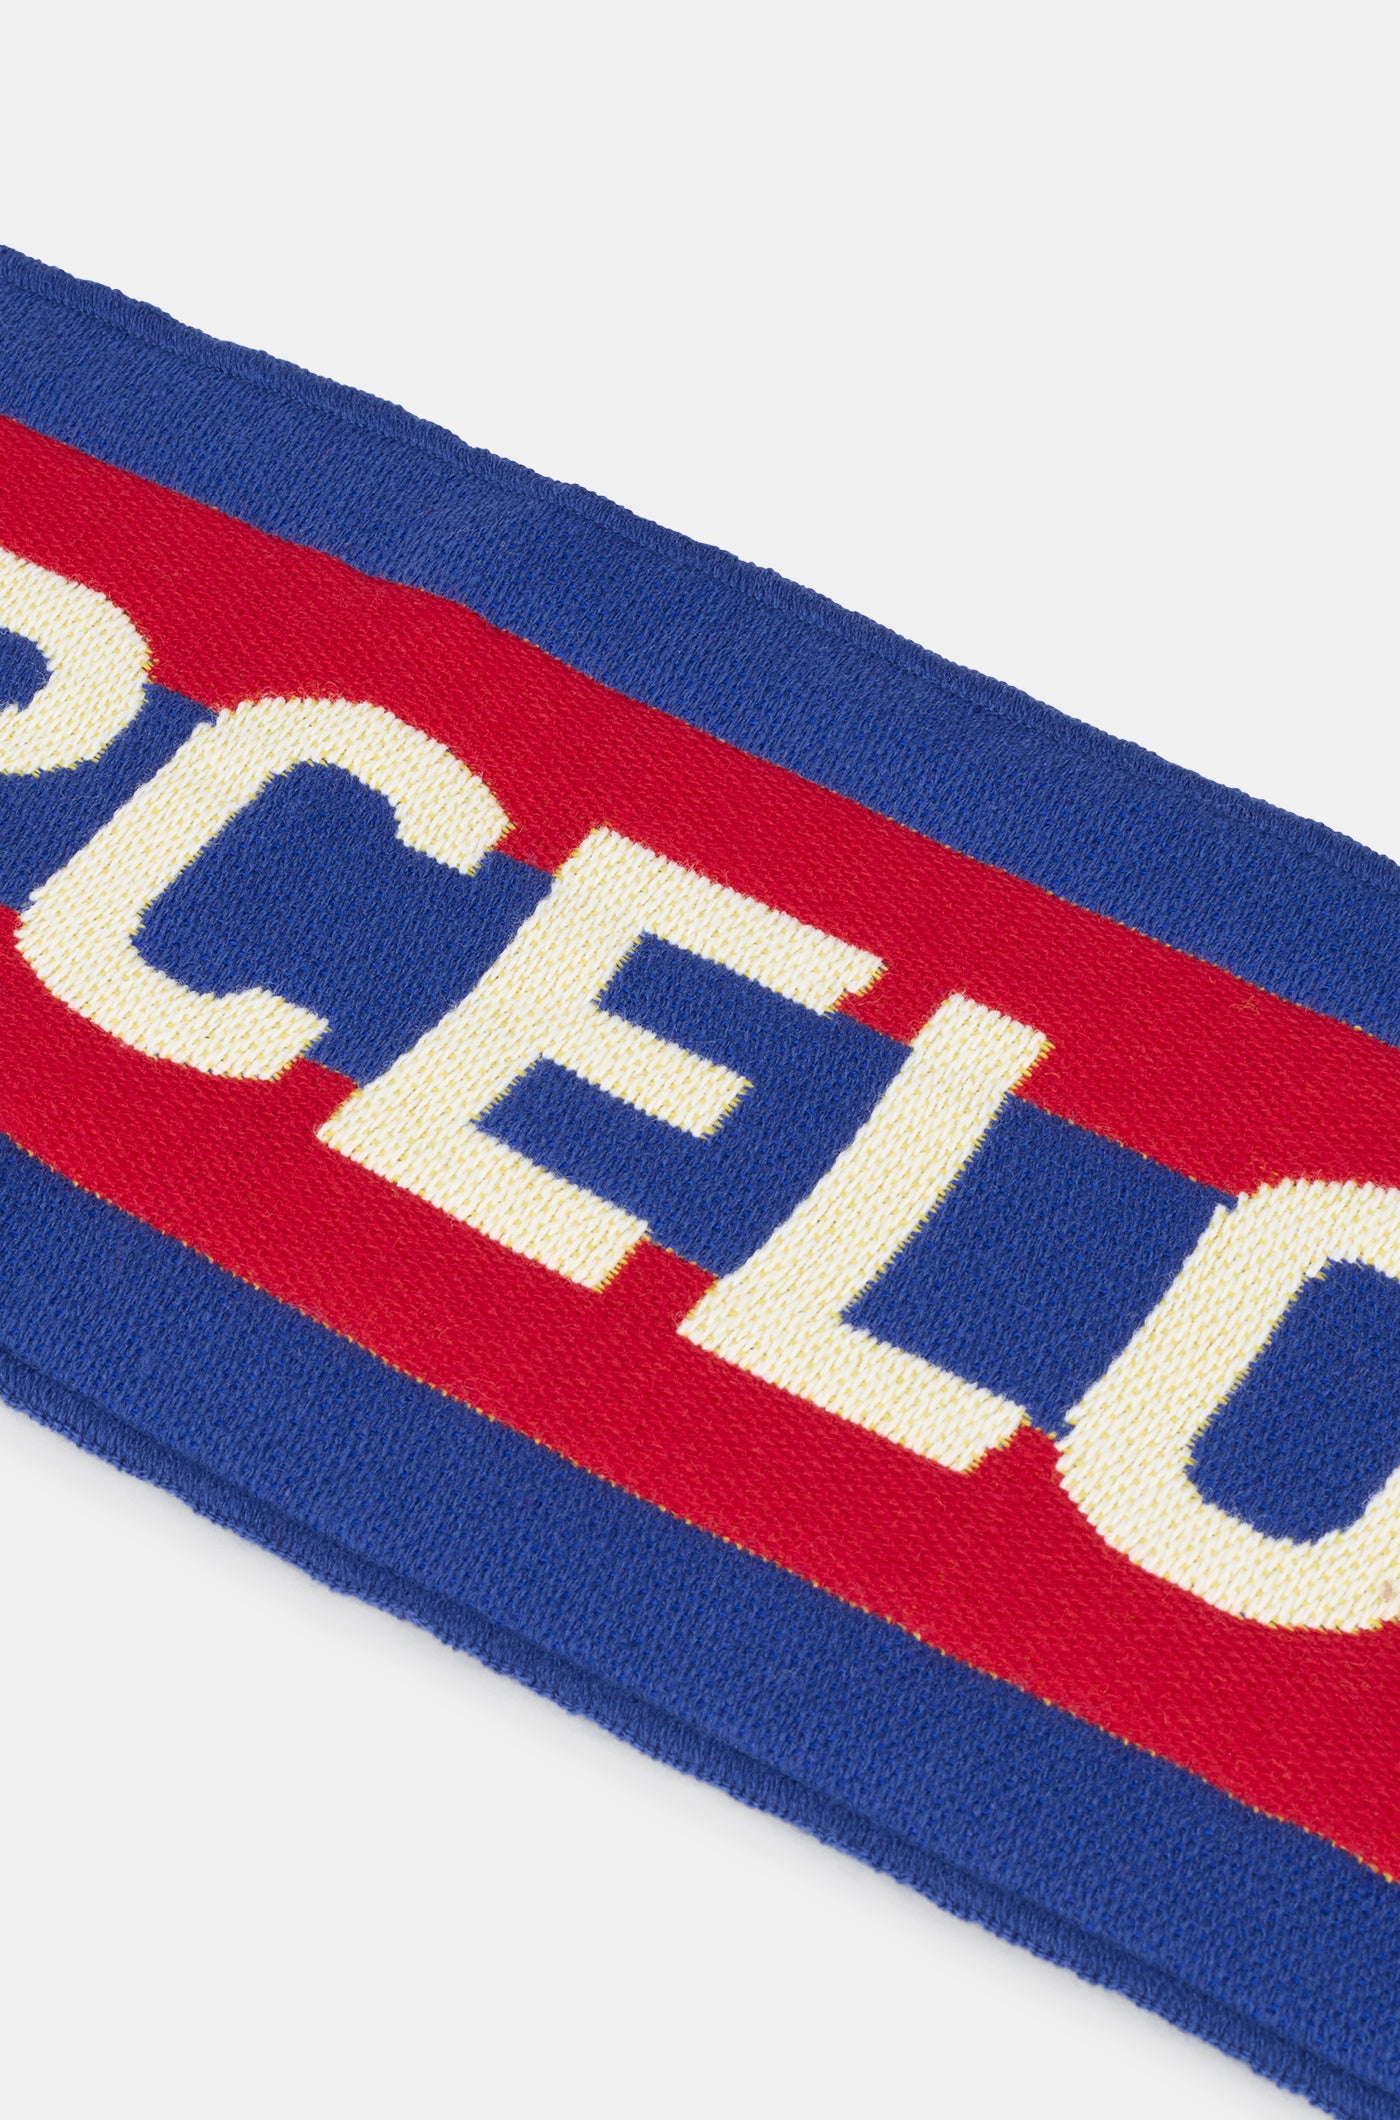 FC Barcelona scarf home 23/24